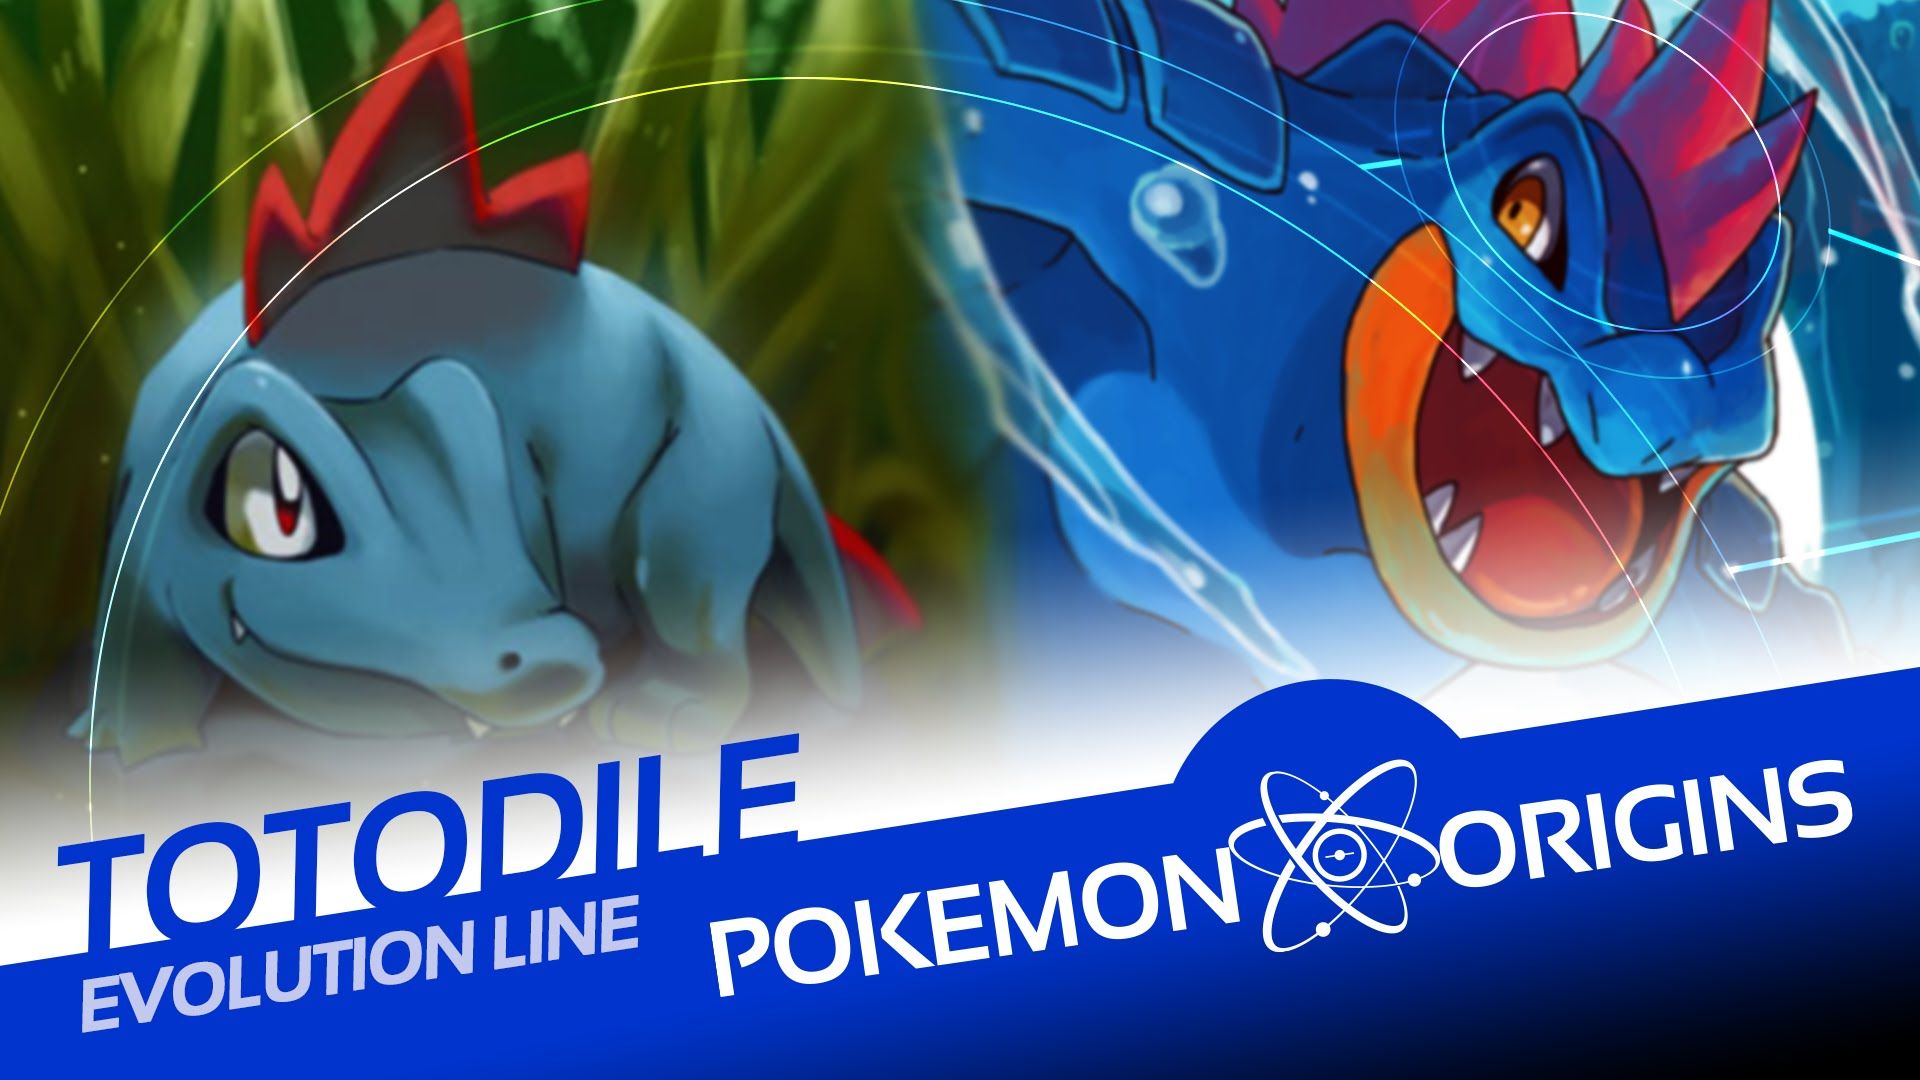 Pokémon Origins | Totodile Evolution Line - YouTube